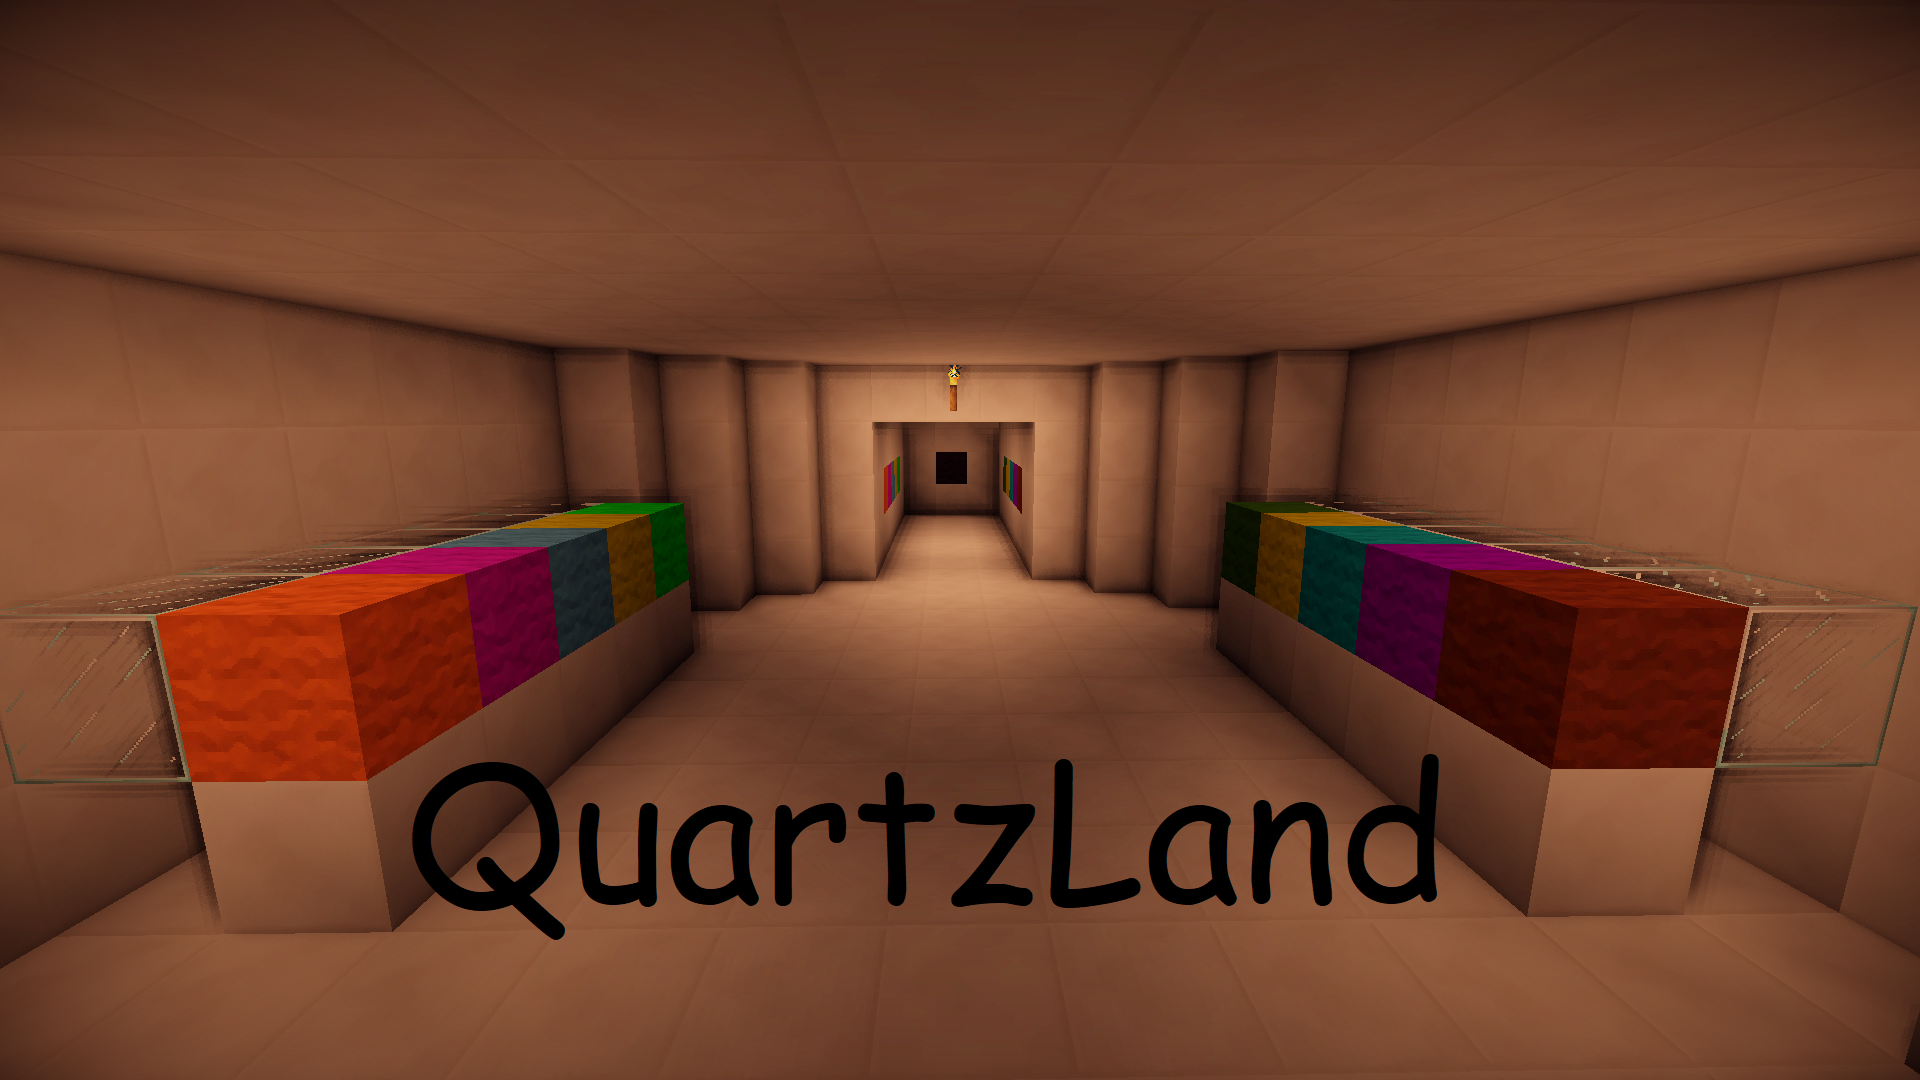 Download QuartzLand for Minecraft 1.14.4